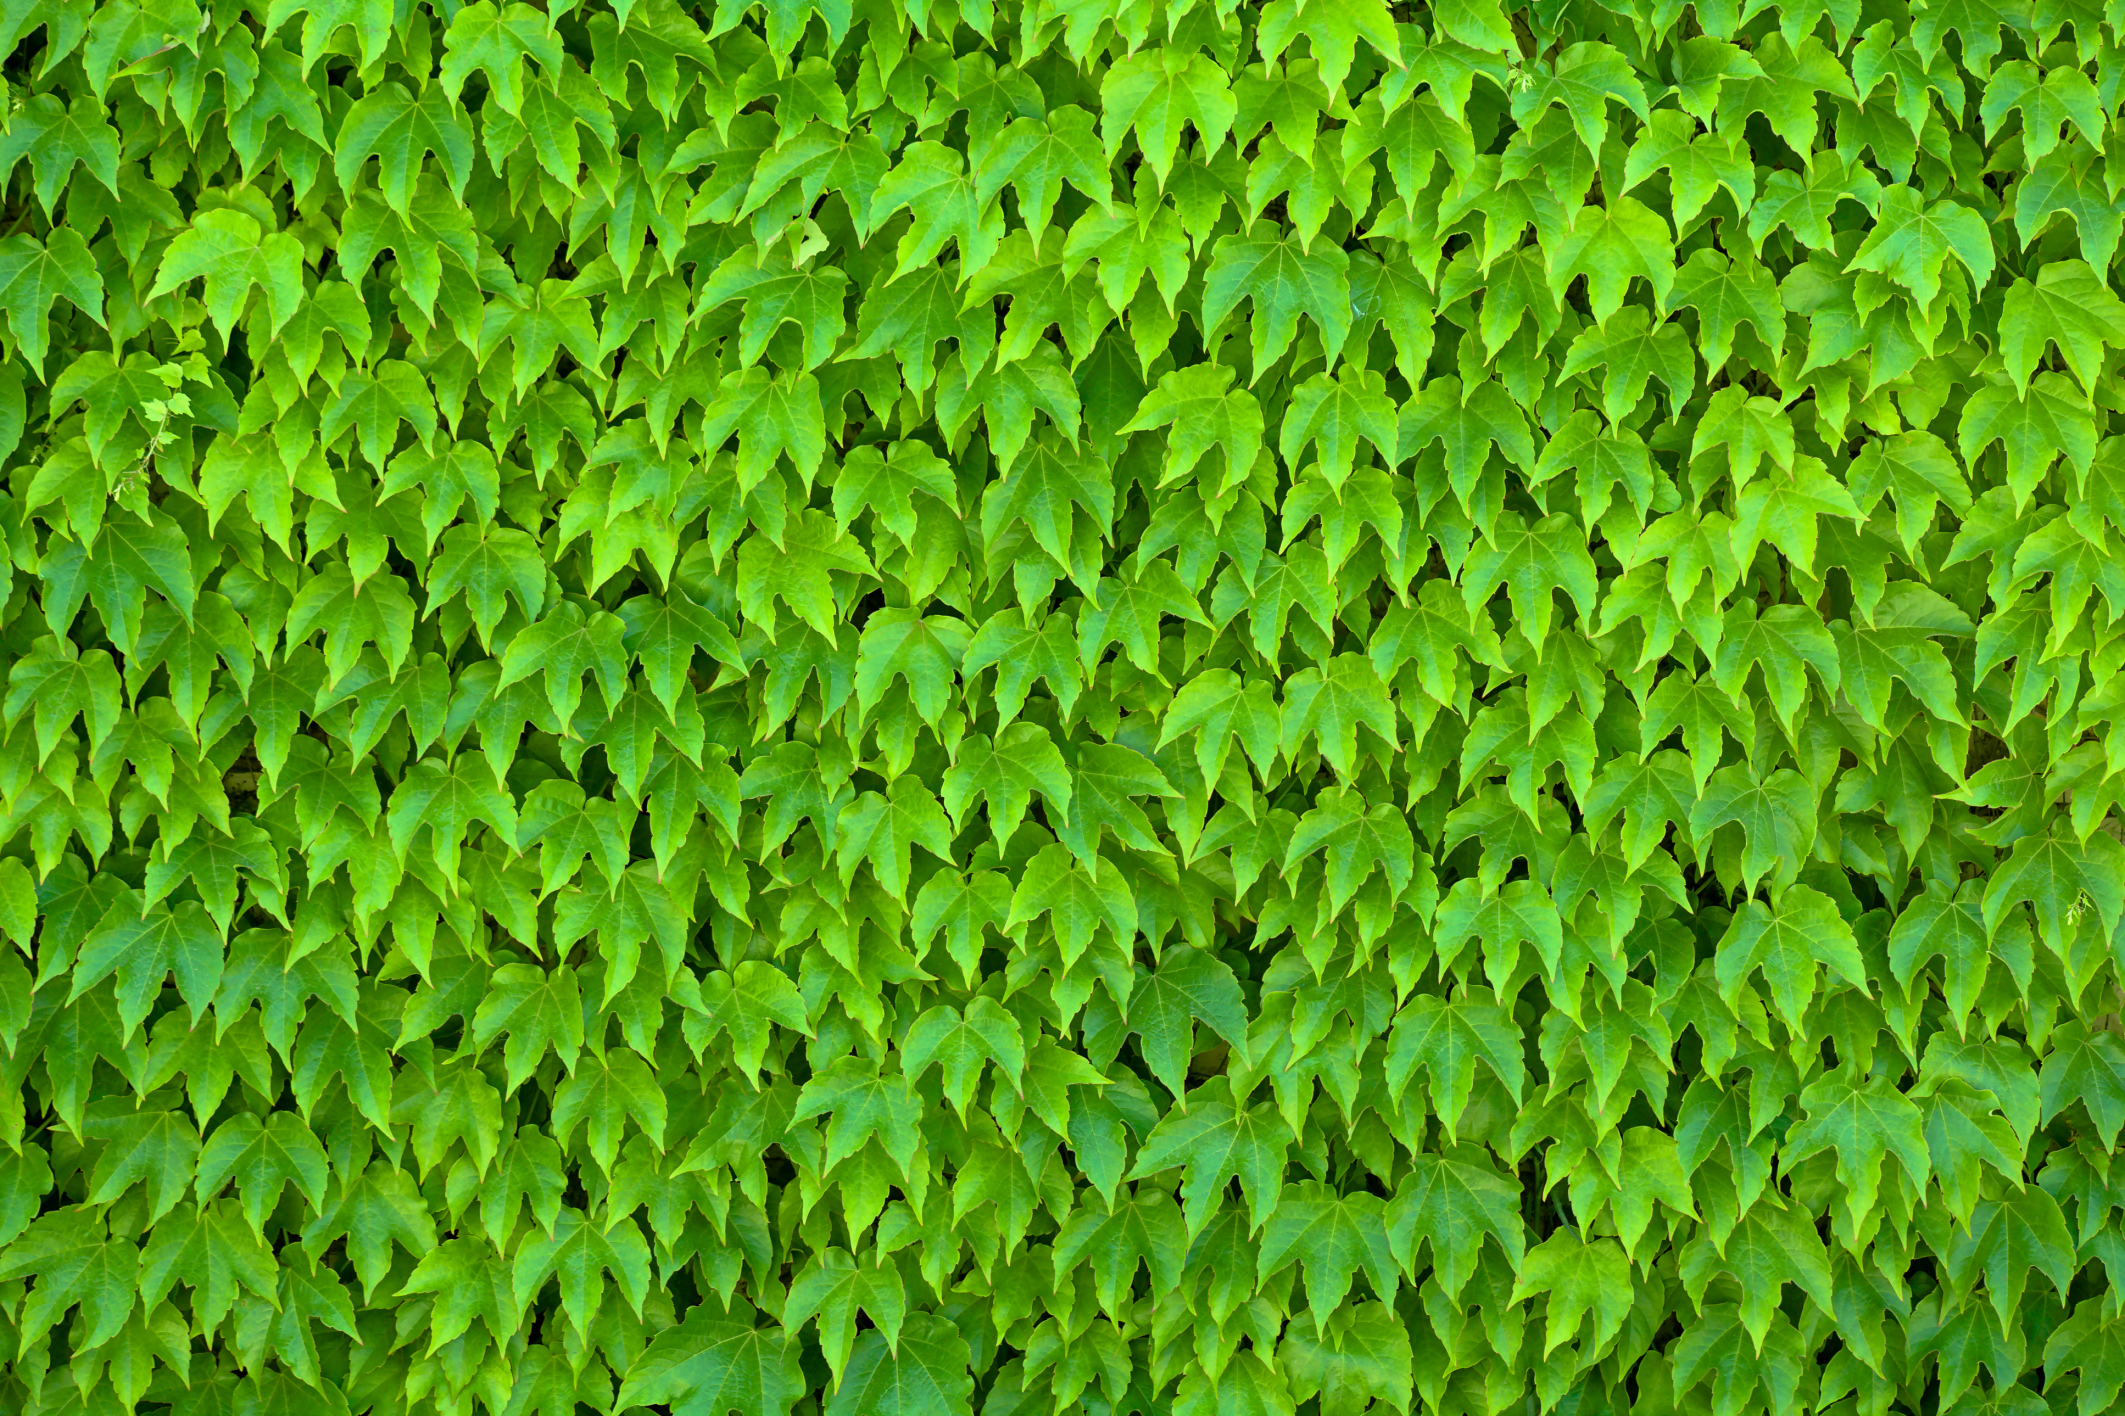 block vine  covered walls